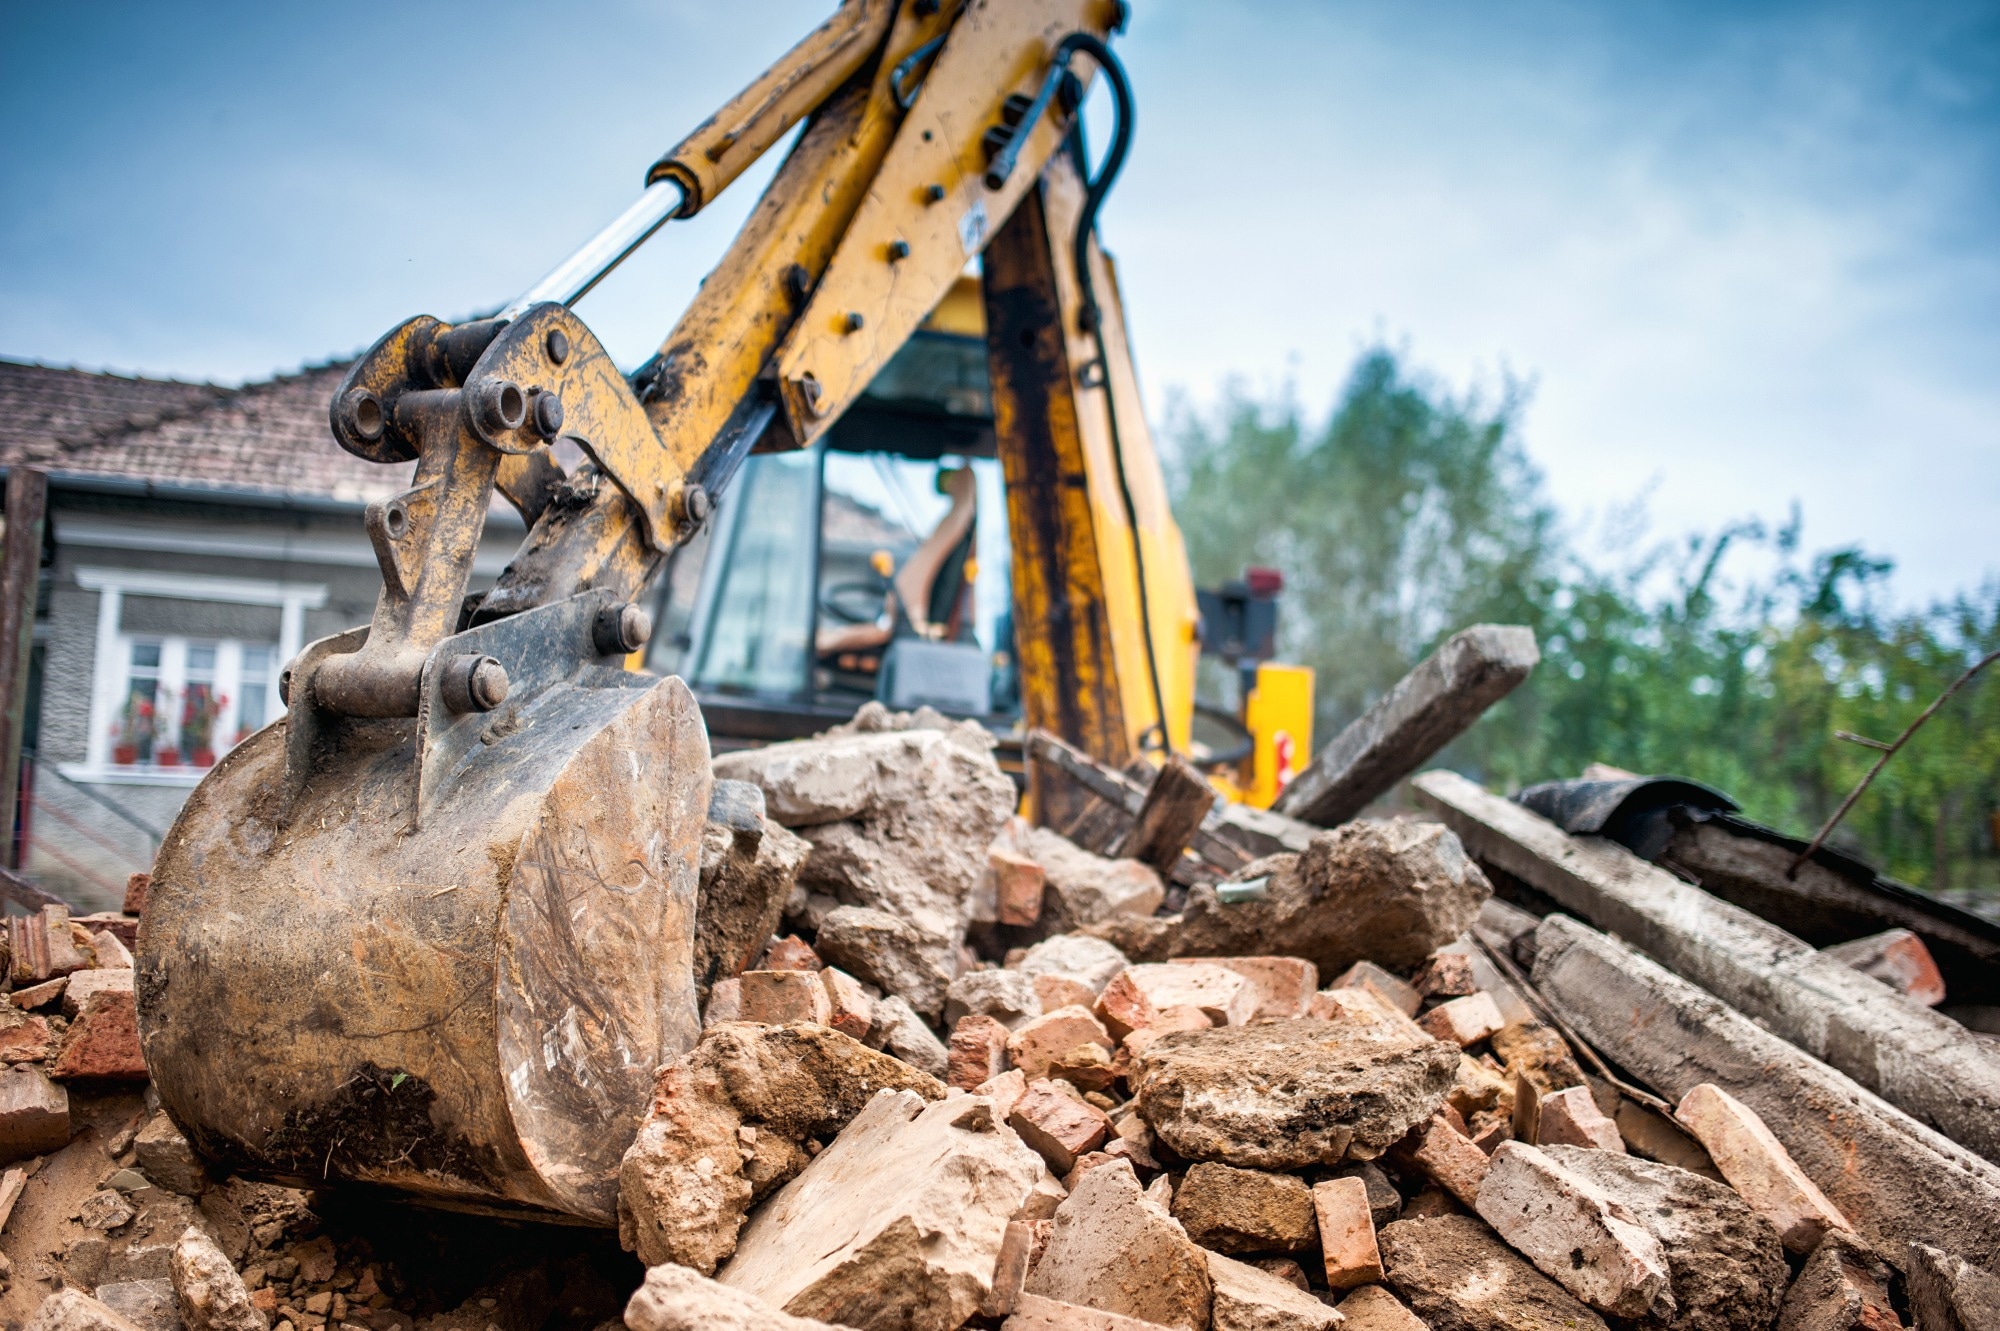 BIM Framework for Sustainable Construction Waste Management